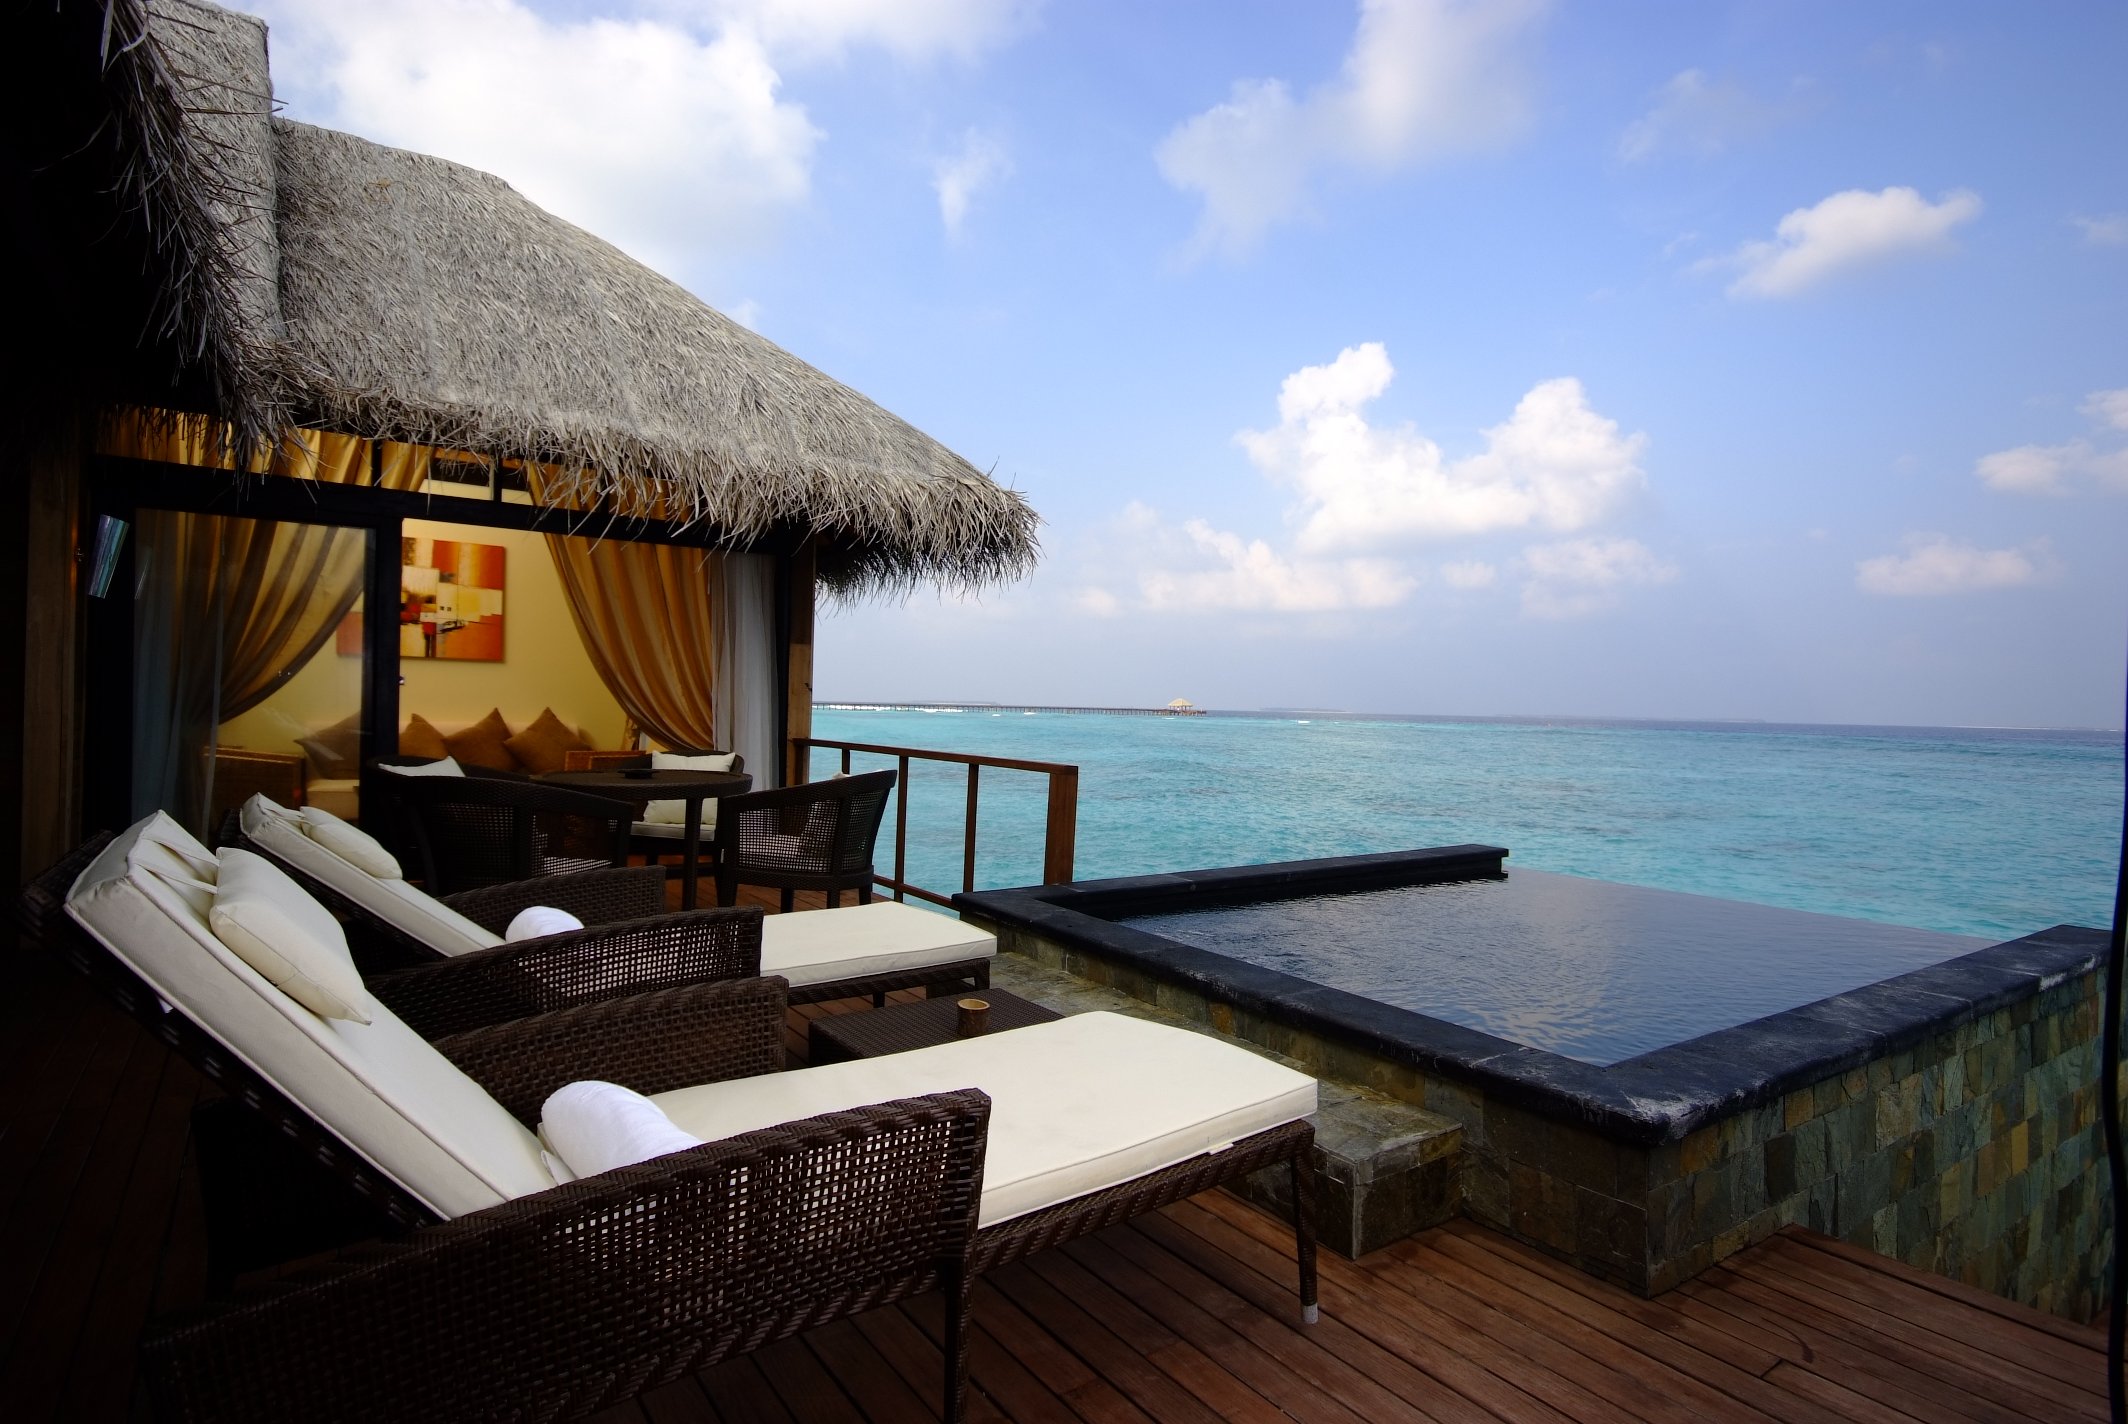 Iruveli A Serene Beach House in Maldives | Architecture ...